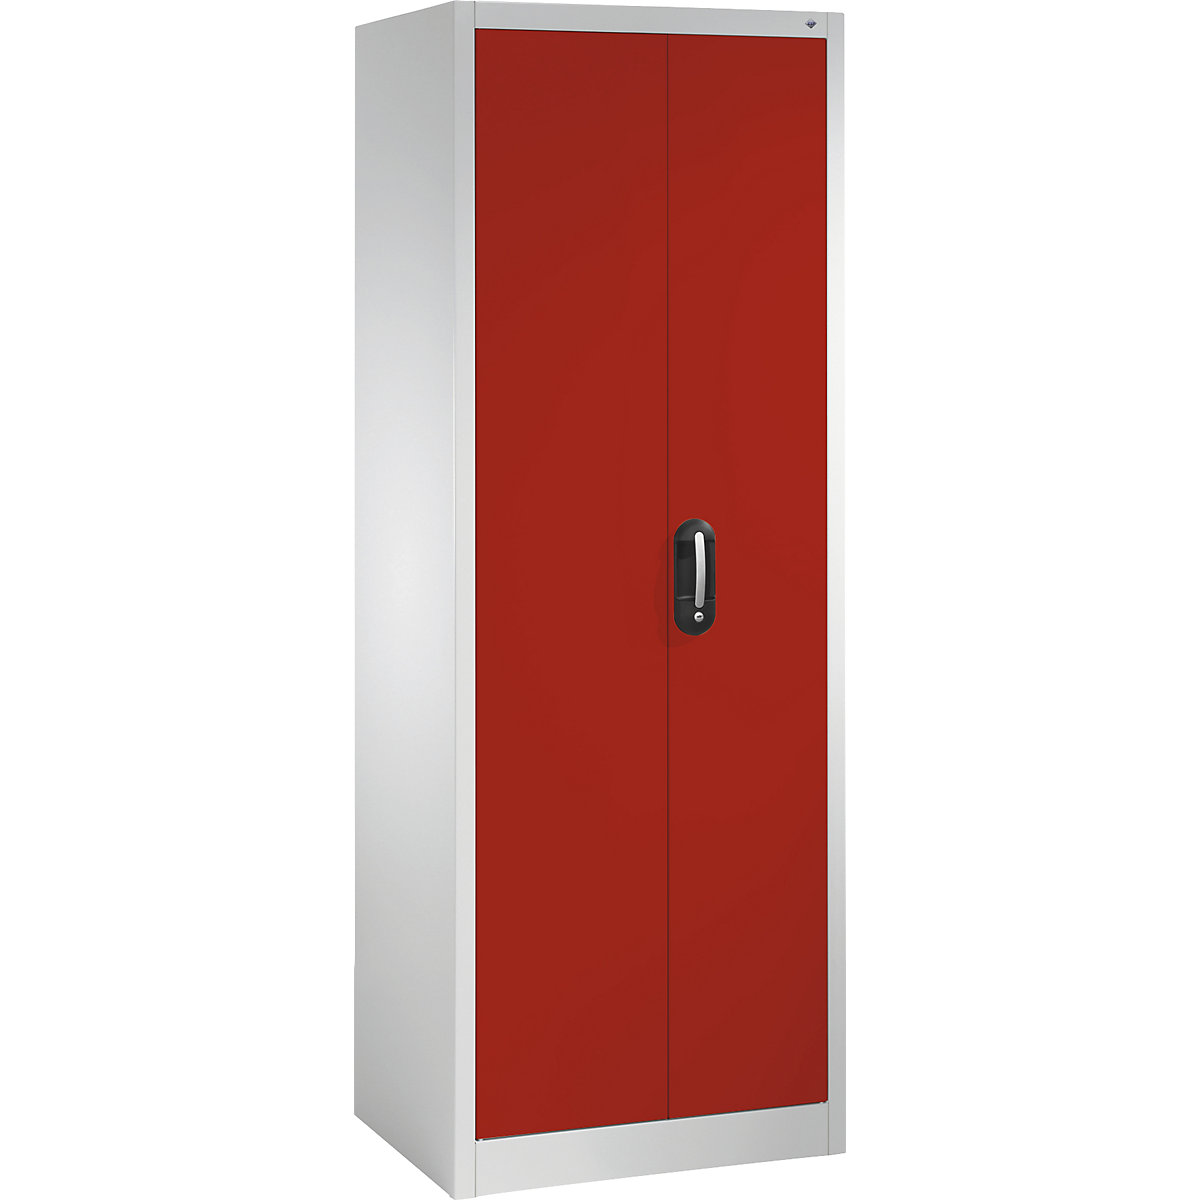 C+P – ACURADO universal cupboard, WxD 700 x 500 mm, light grey / flame red